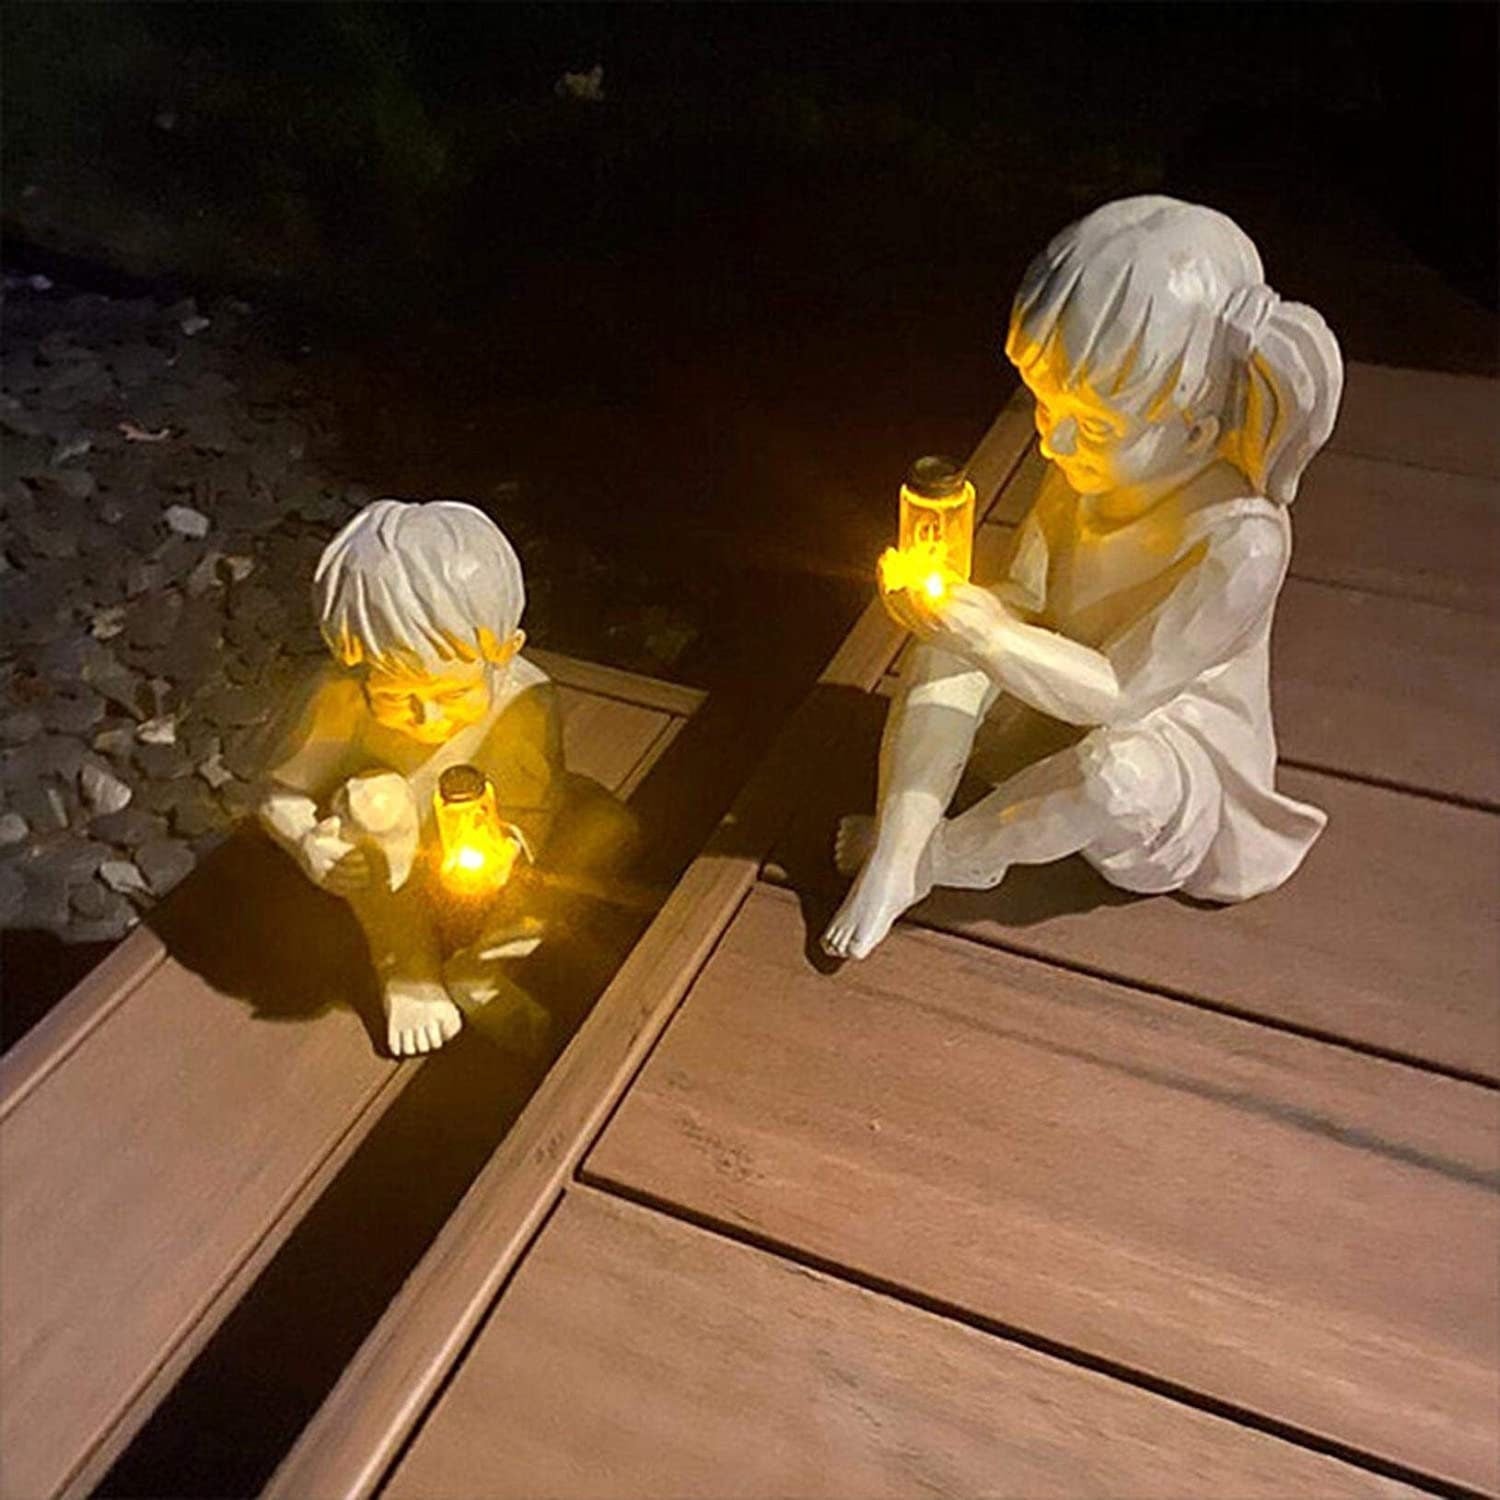 Boy & Girl Solar Lighted Fireflies Jar Light Statues Lawn Yard Garden Decor